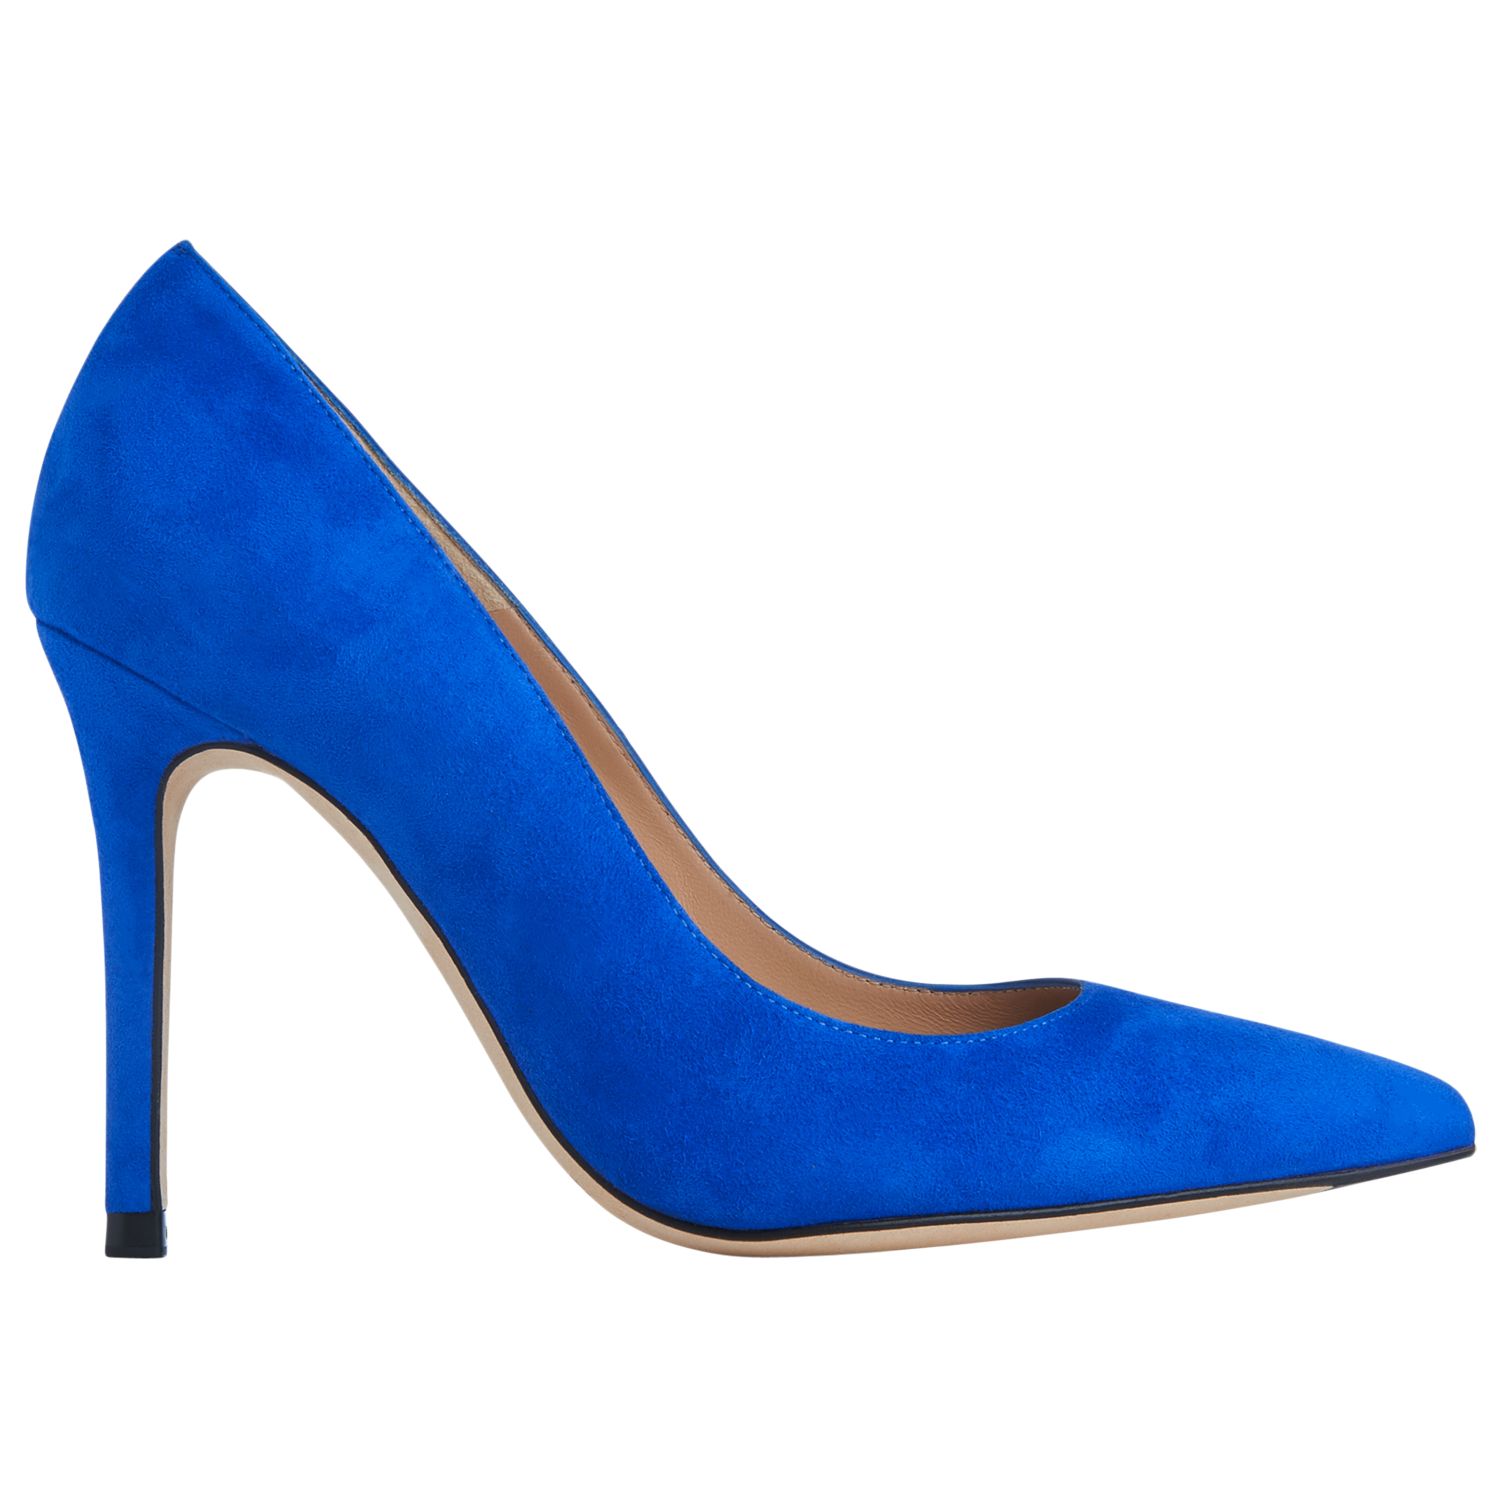 L.K.Bennett Fern Court Shoes, Bright Blue Suede at John Lewis & Partners